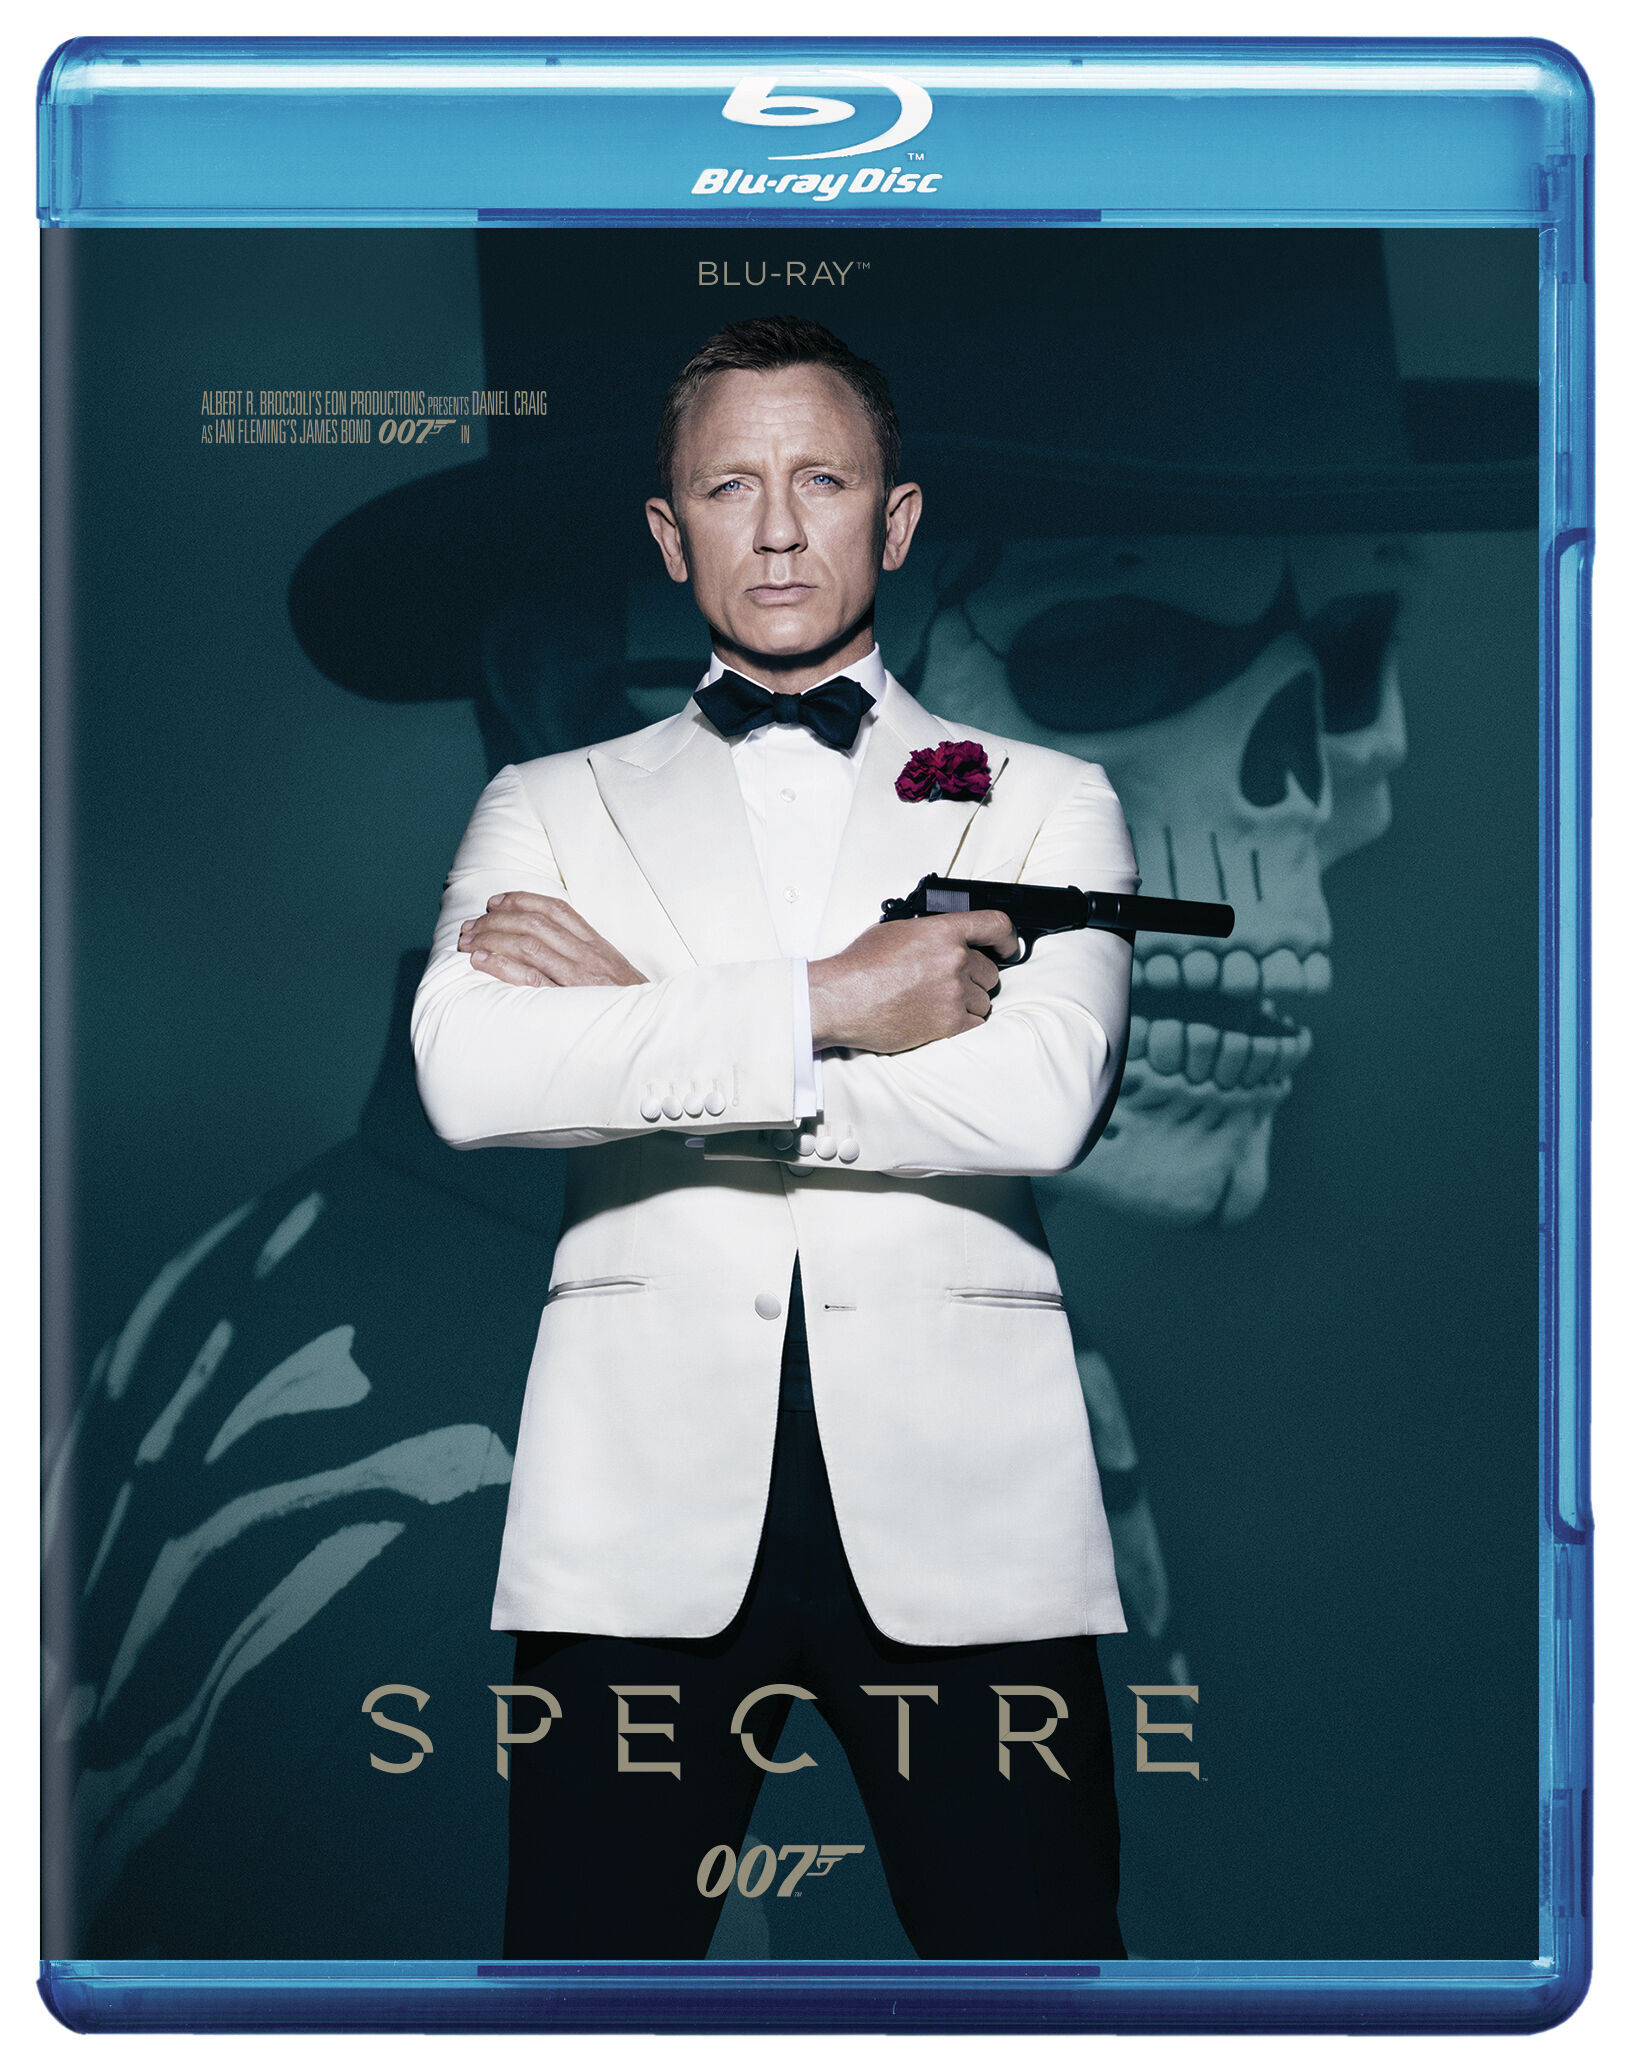 Spectre (Blu-ray New Box Art) - Blu-ray [ 2015 ]  - Action Movies On Blu-ray - Movies On GRUV